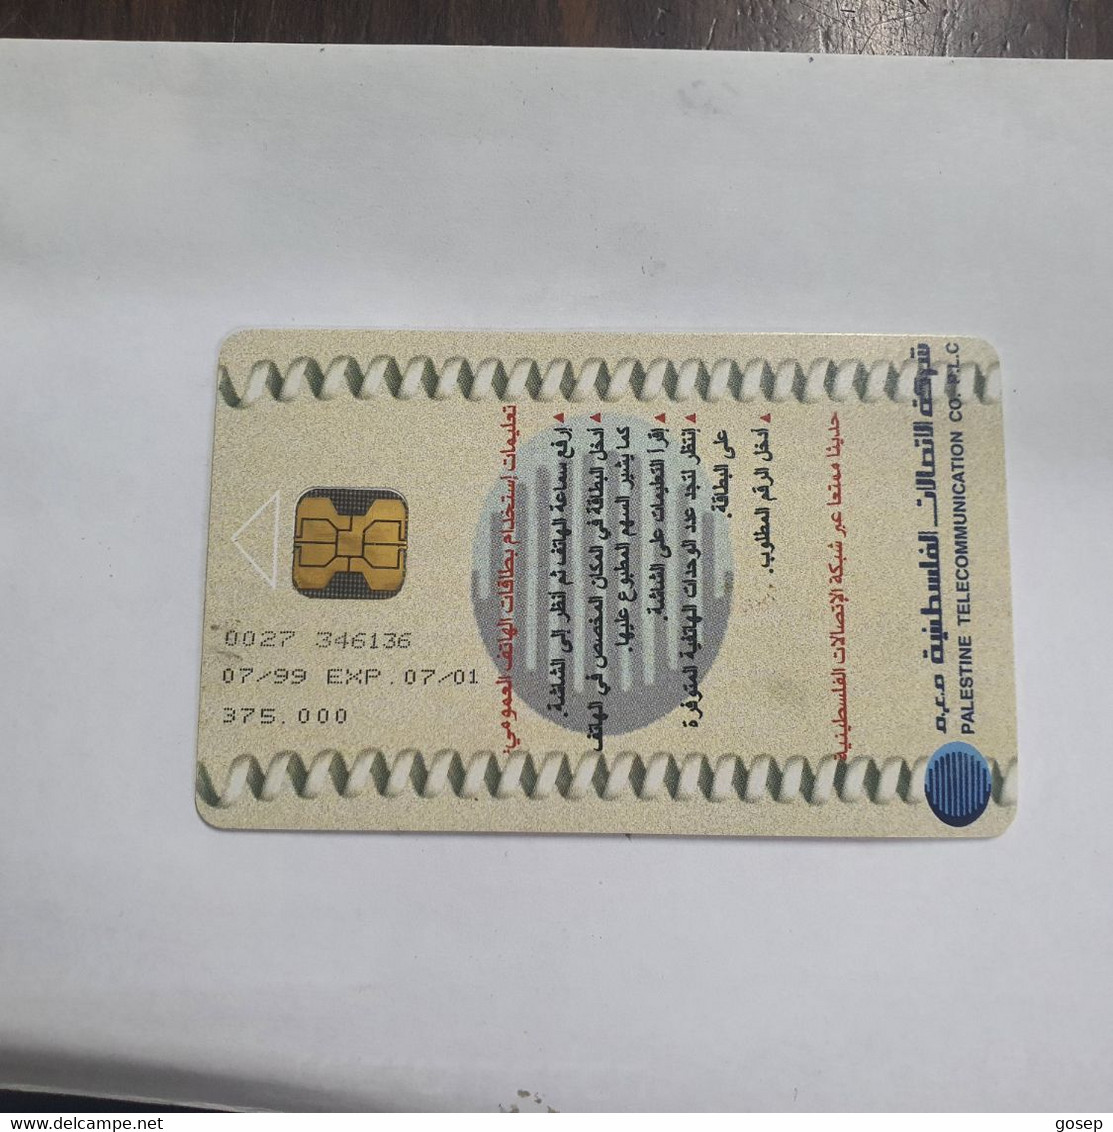 Plastine-(PS-PAL-0005D)-Bridal Dress From Yazour-(450)-(7/1999)(15₪)(0027-346136)-used Card+1card Prepiad Free - Palestine